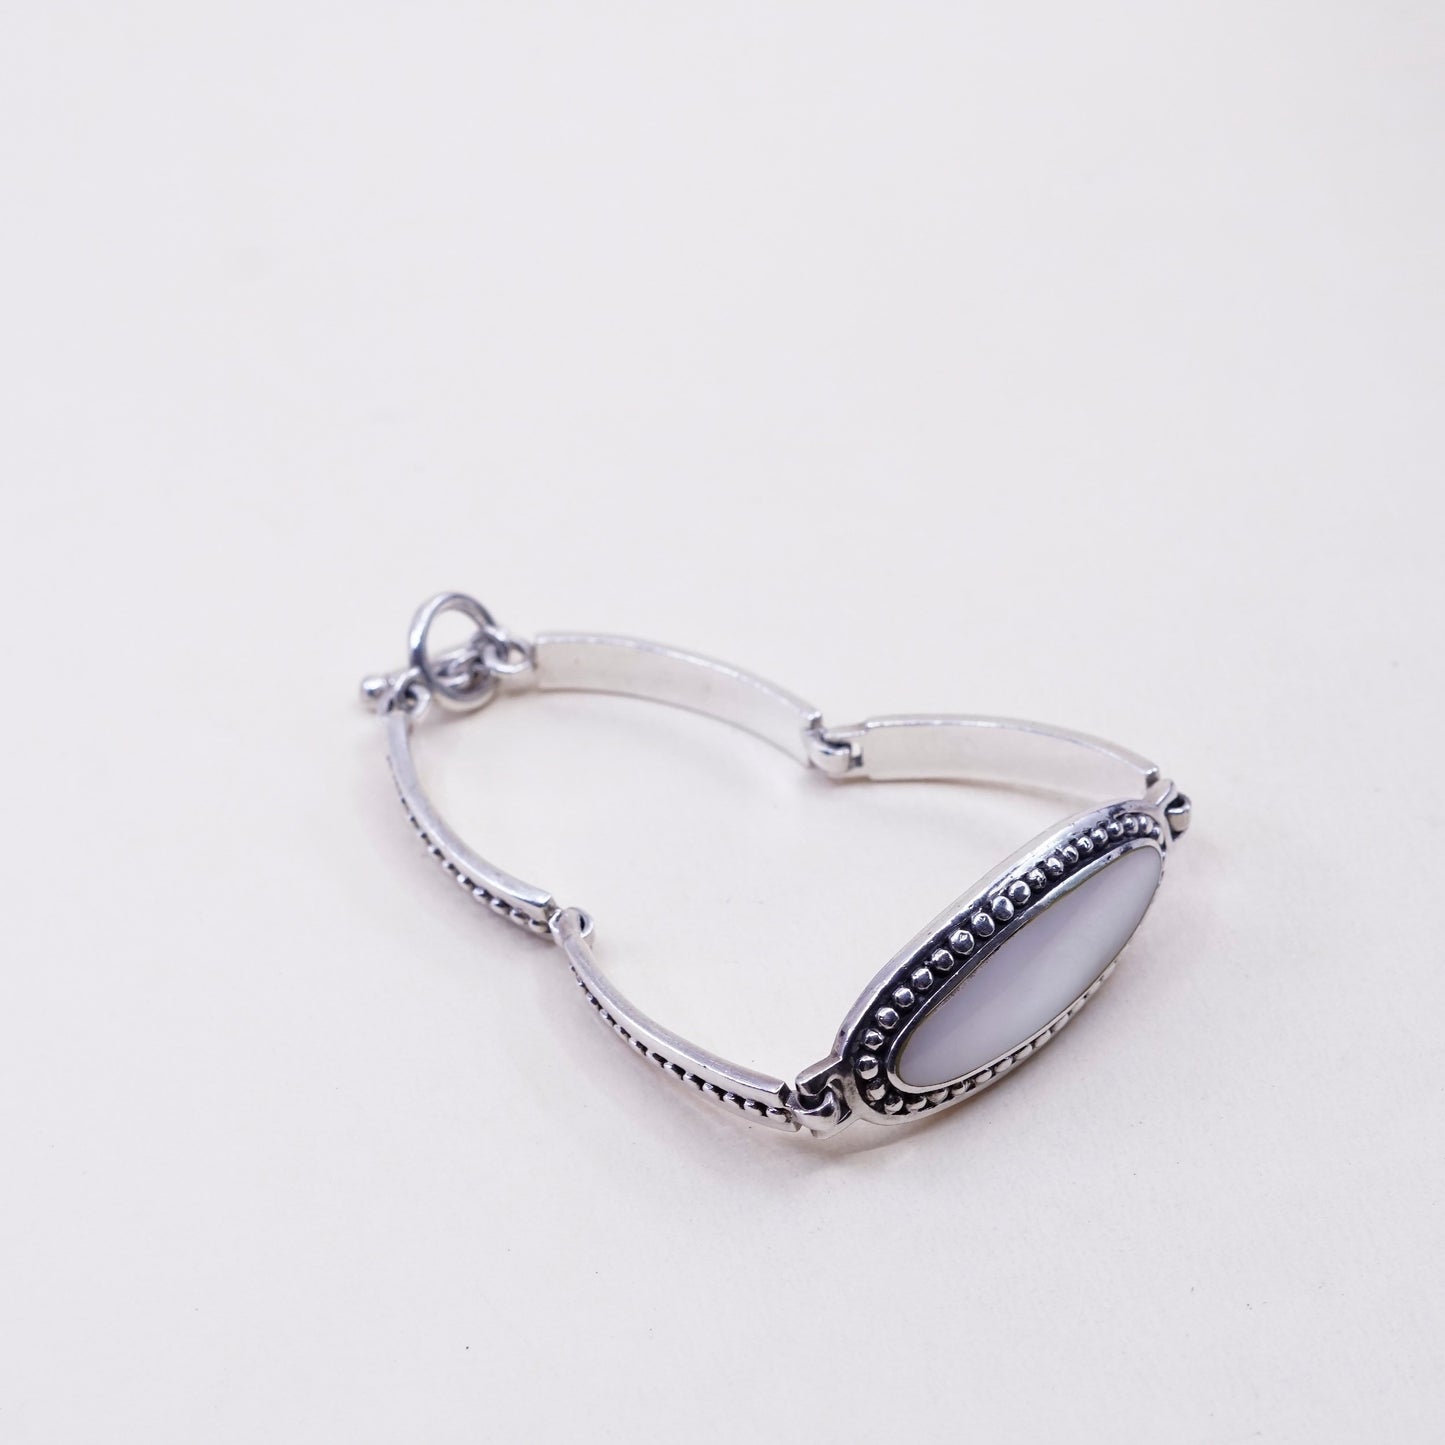 7”, GFS Sterling silver handmade bar bracelet, 925 w/ white mother of pearl